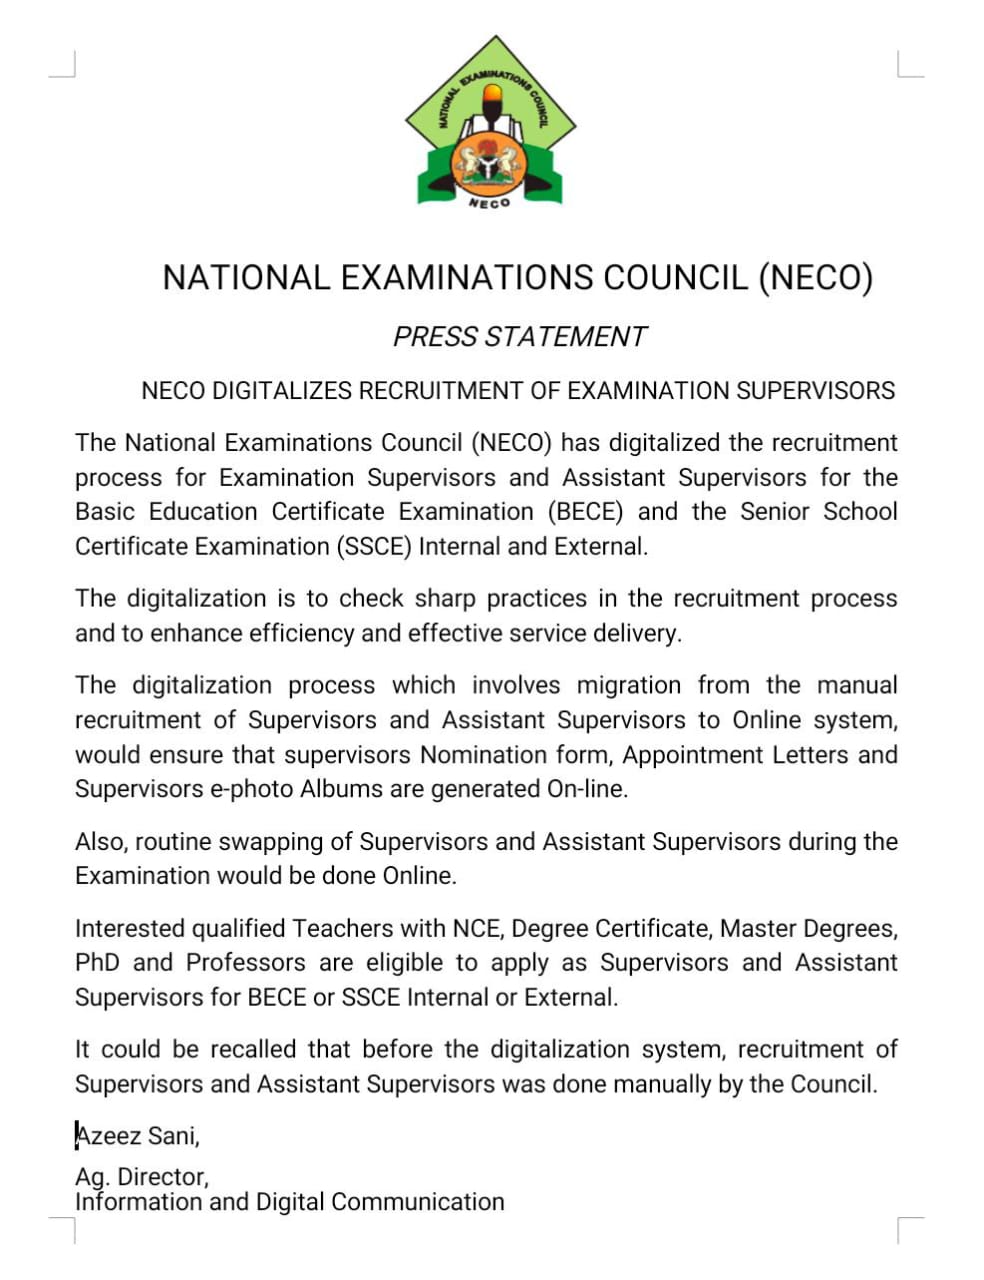 NECO Digitalizes Recruitment Of Examination Supervisors